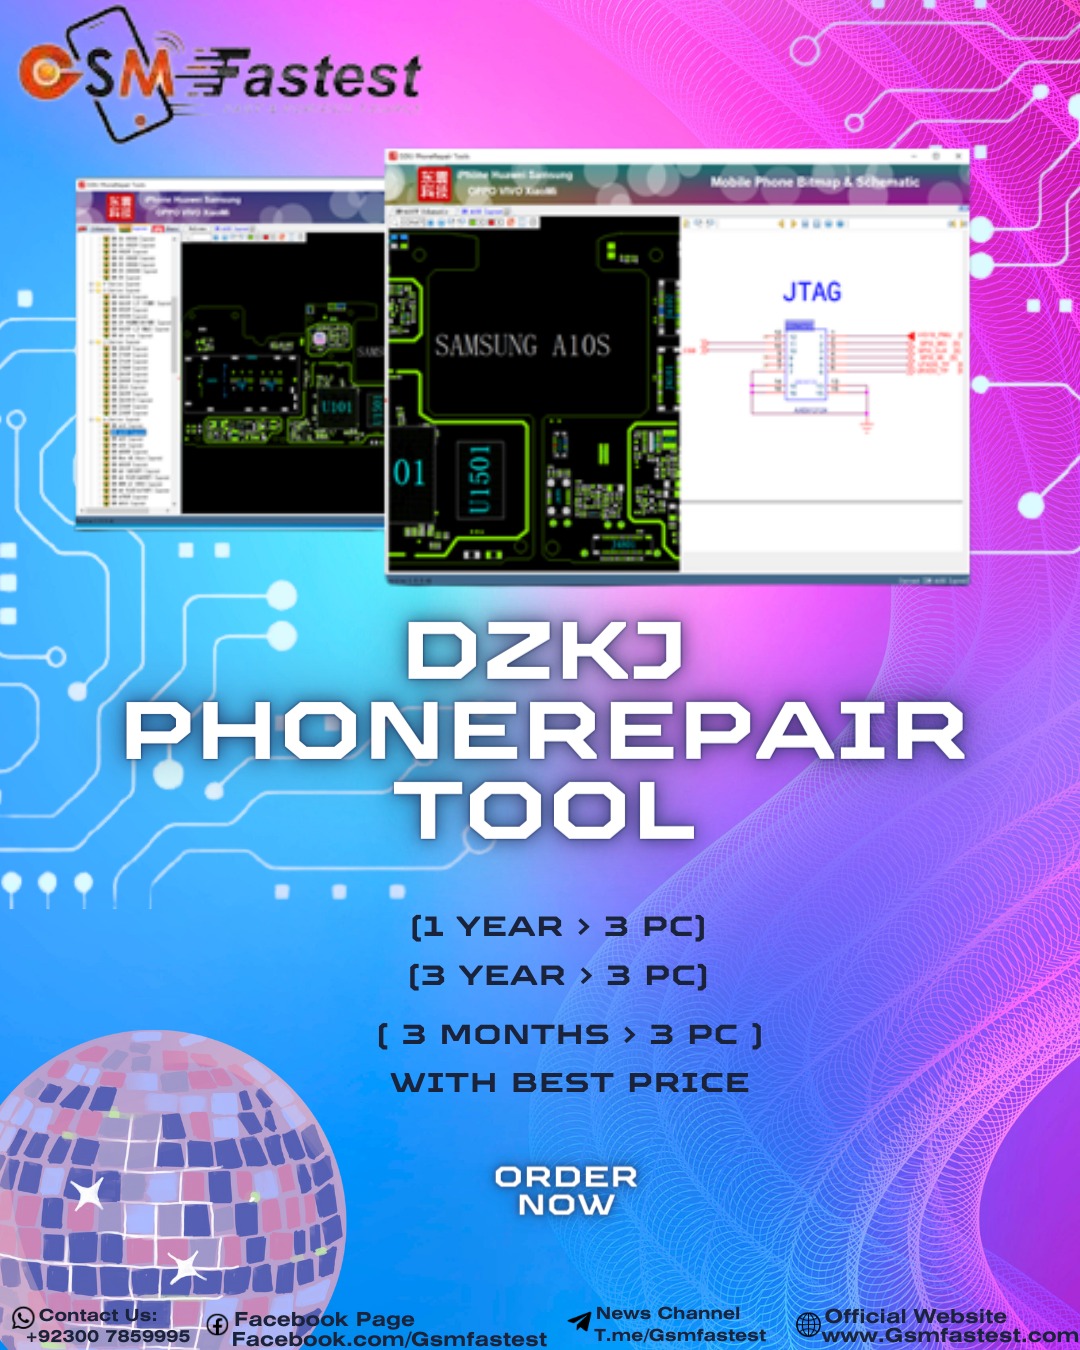 DZKJ PhoneRepair Tools (1 Year > 3 PC)